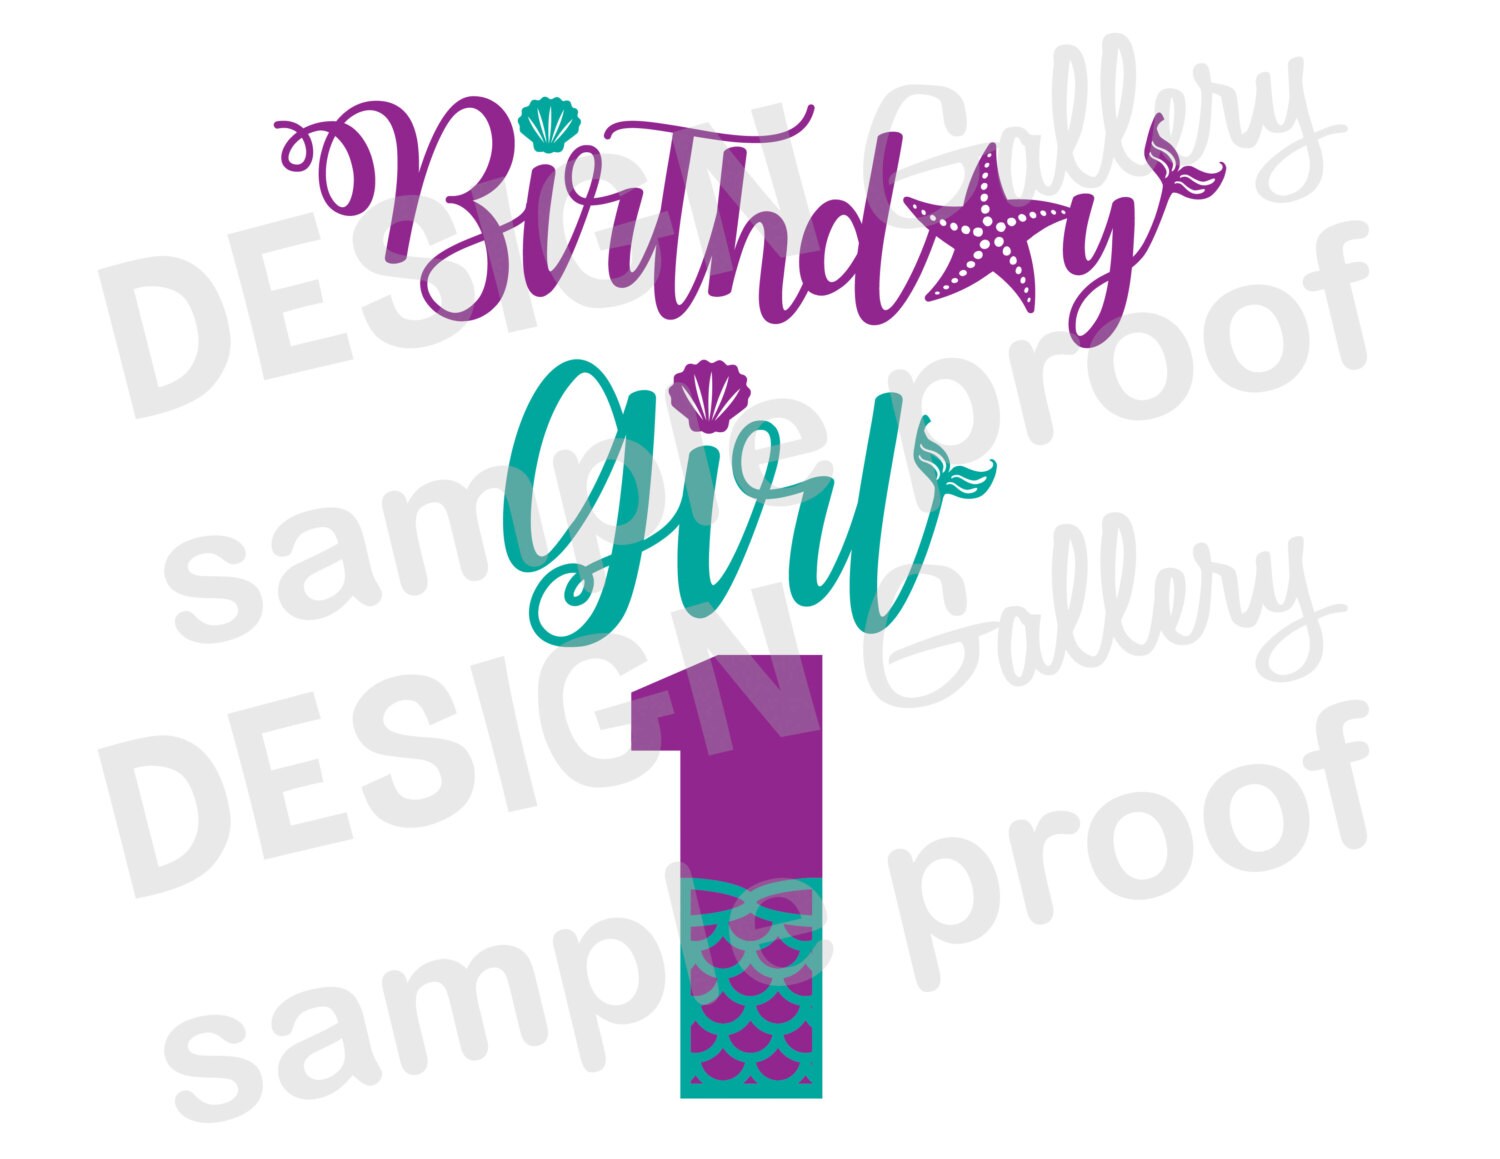 Download Birthday Girl 1 one Mermaid style image JPG png & SVG